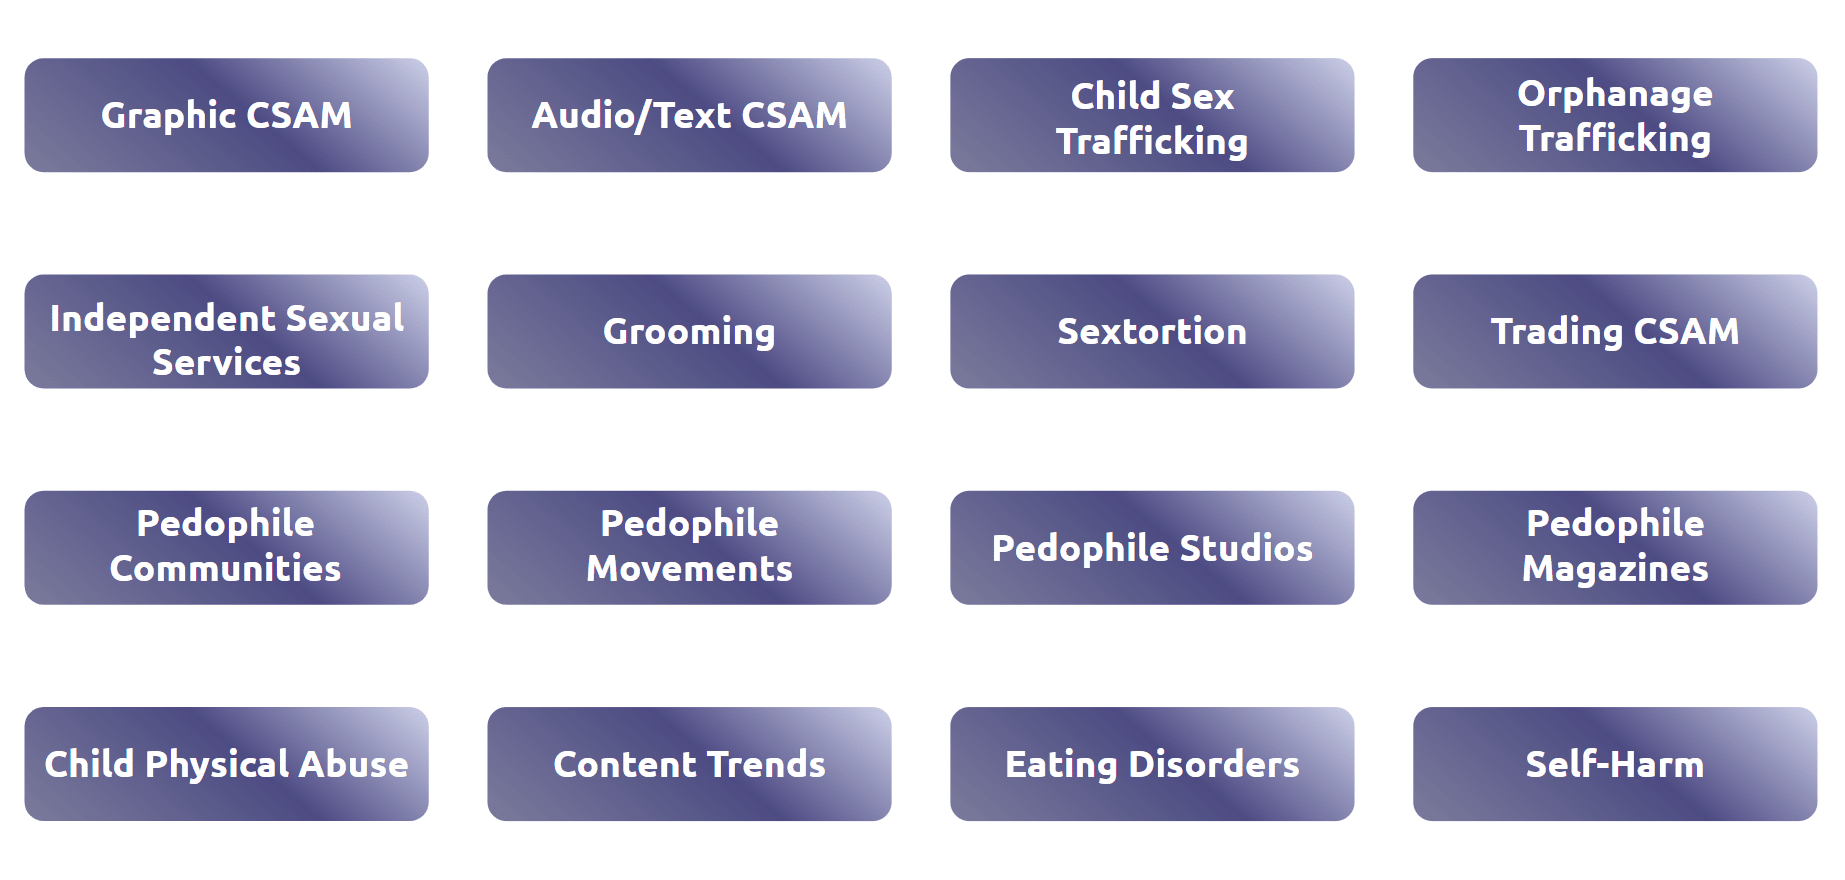 Types of non-graphic CSAM